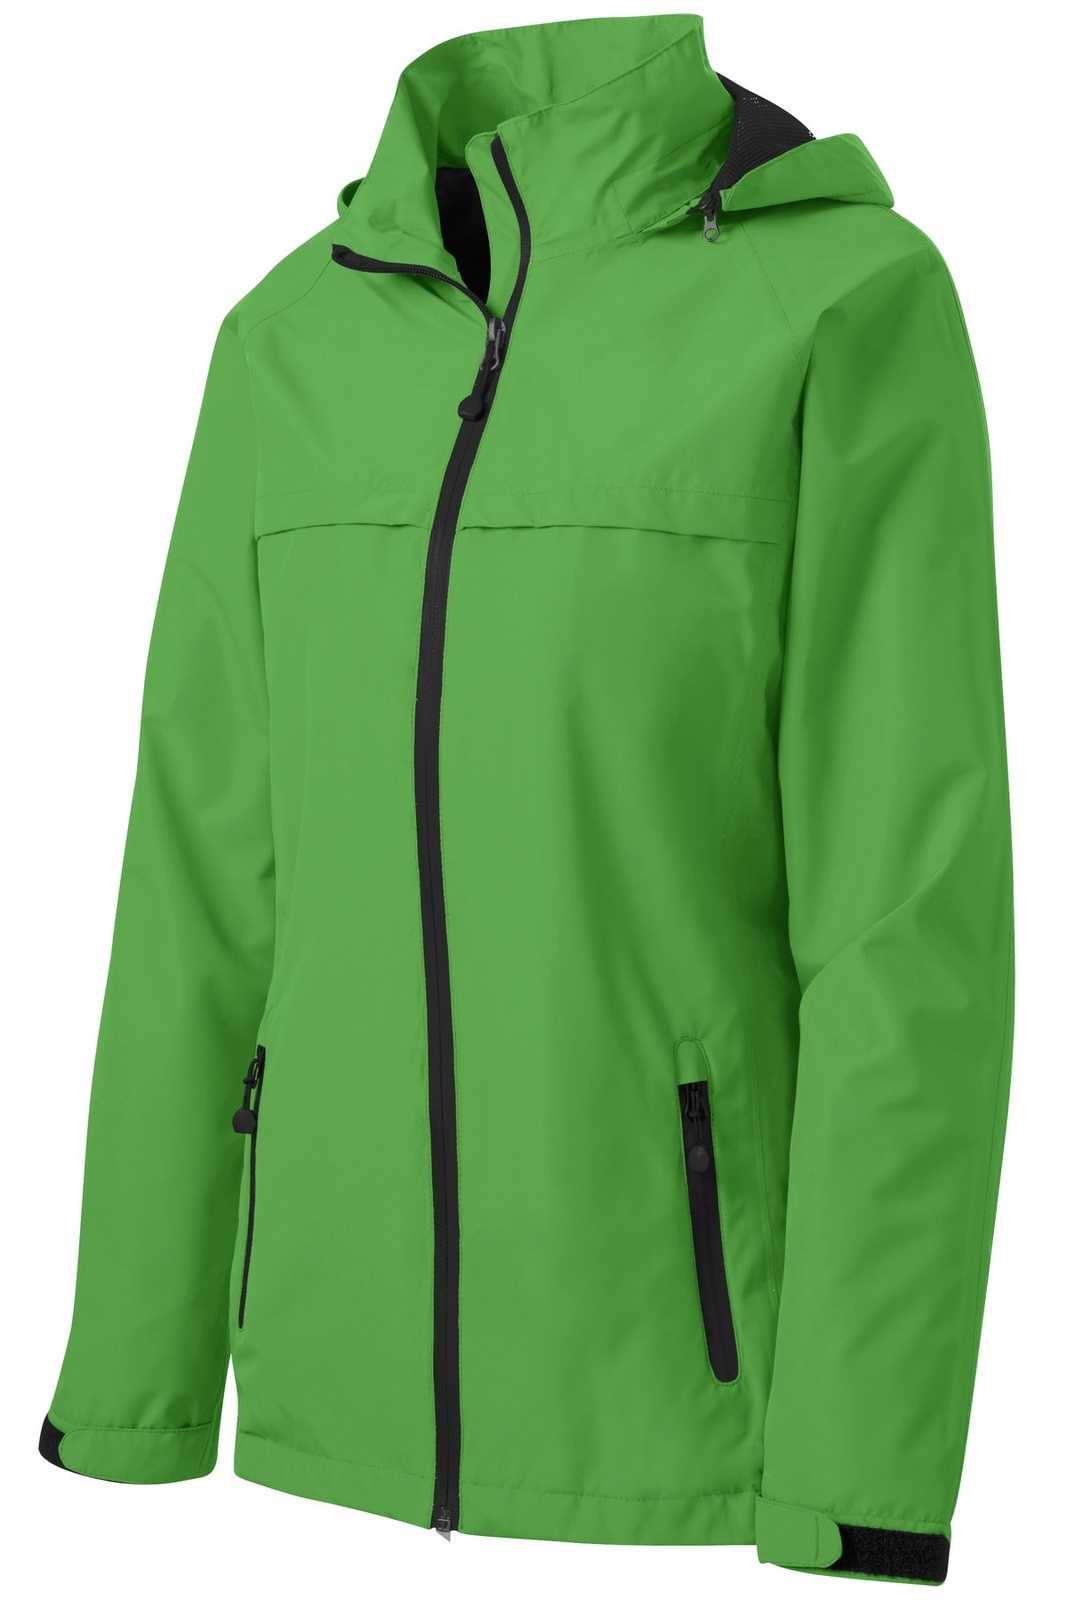 Port Authority L333 Ladies Torrent Waterproof Jacket - Vine Green - HIT a Double - 5